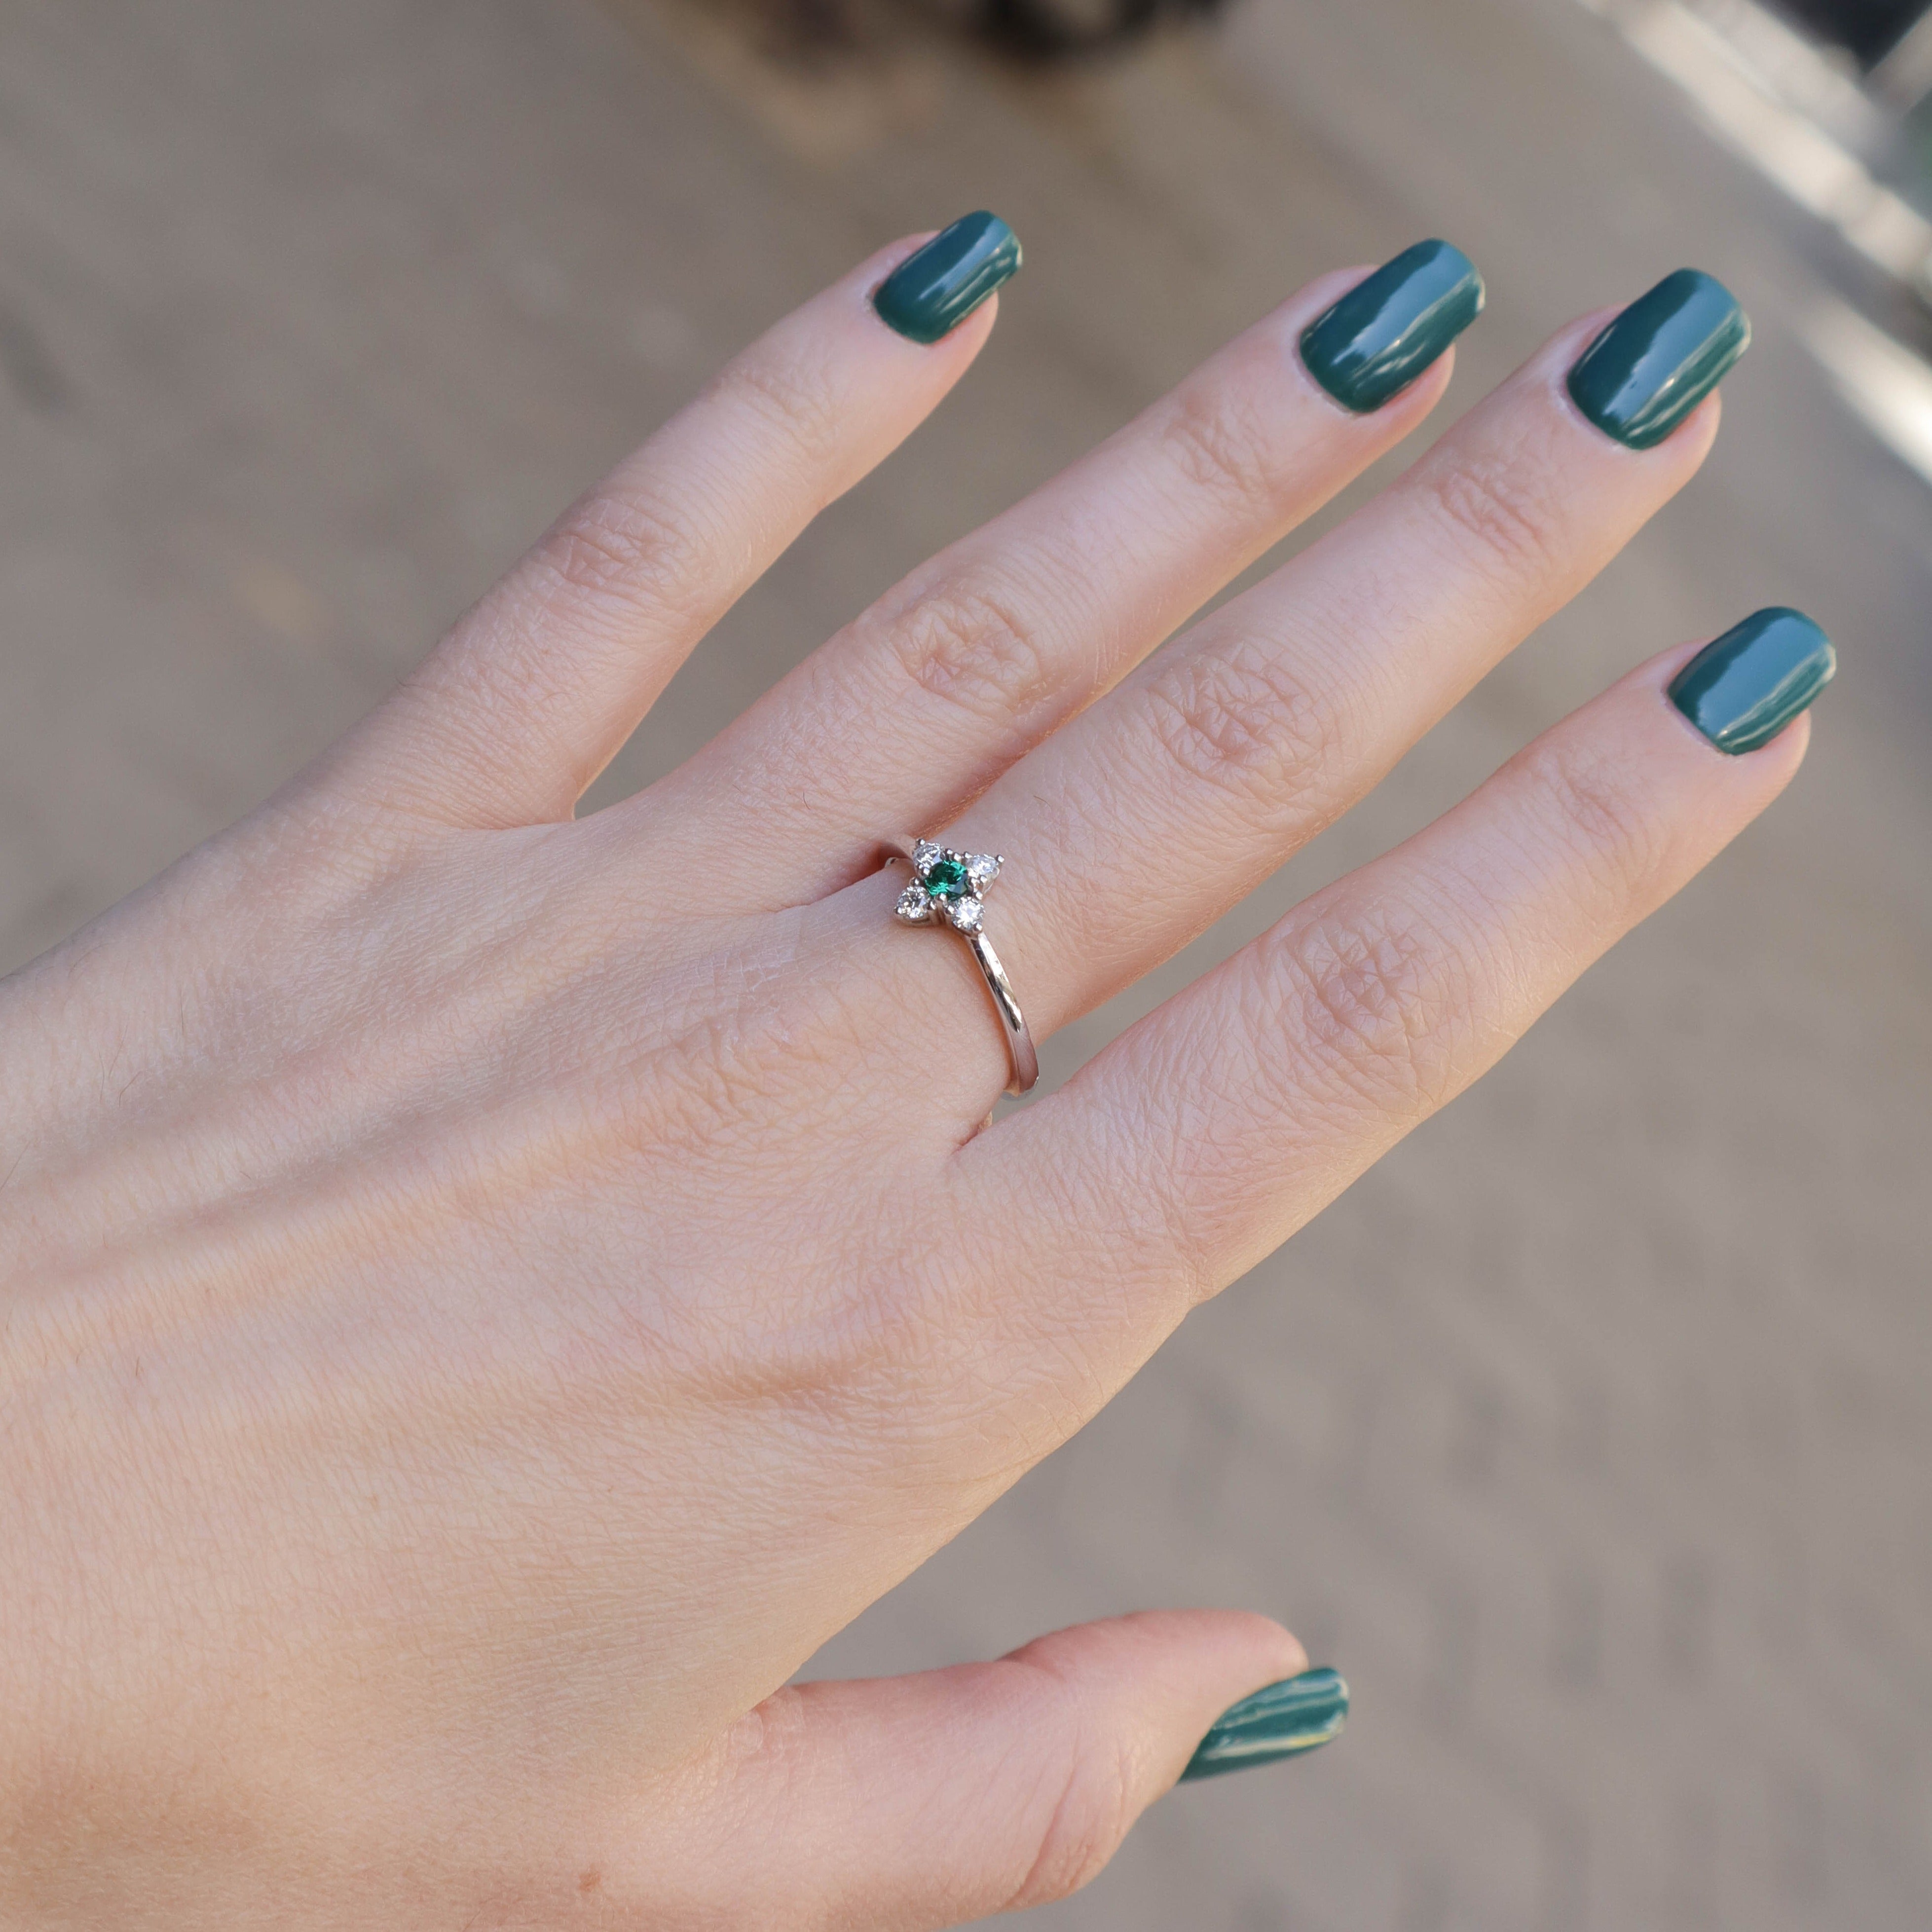 Eliana Ring Emerald and diamonds